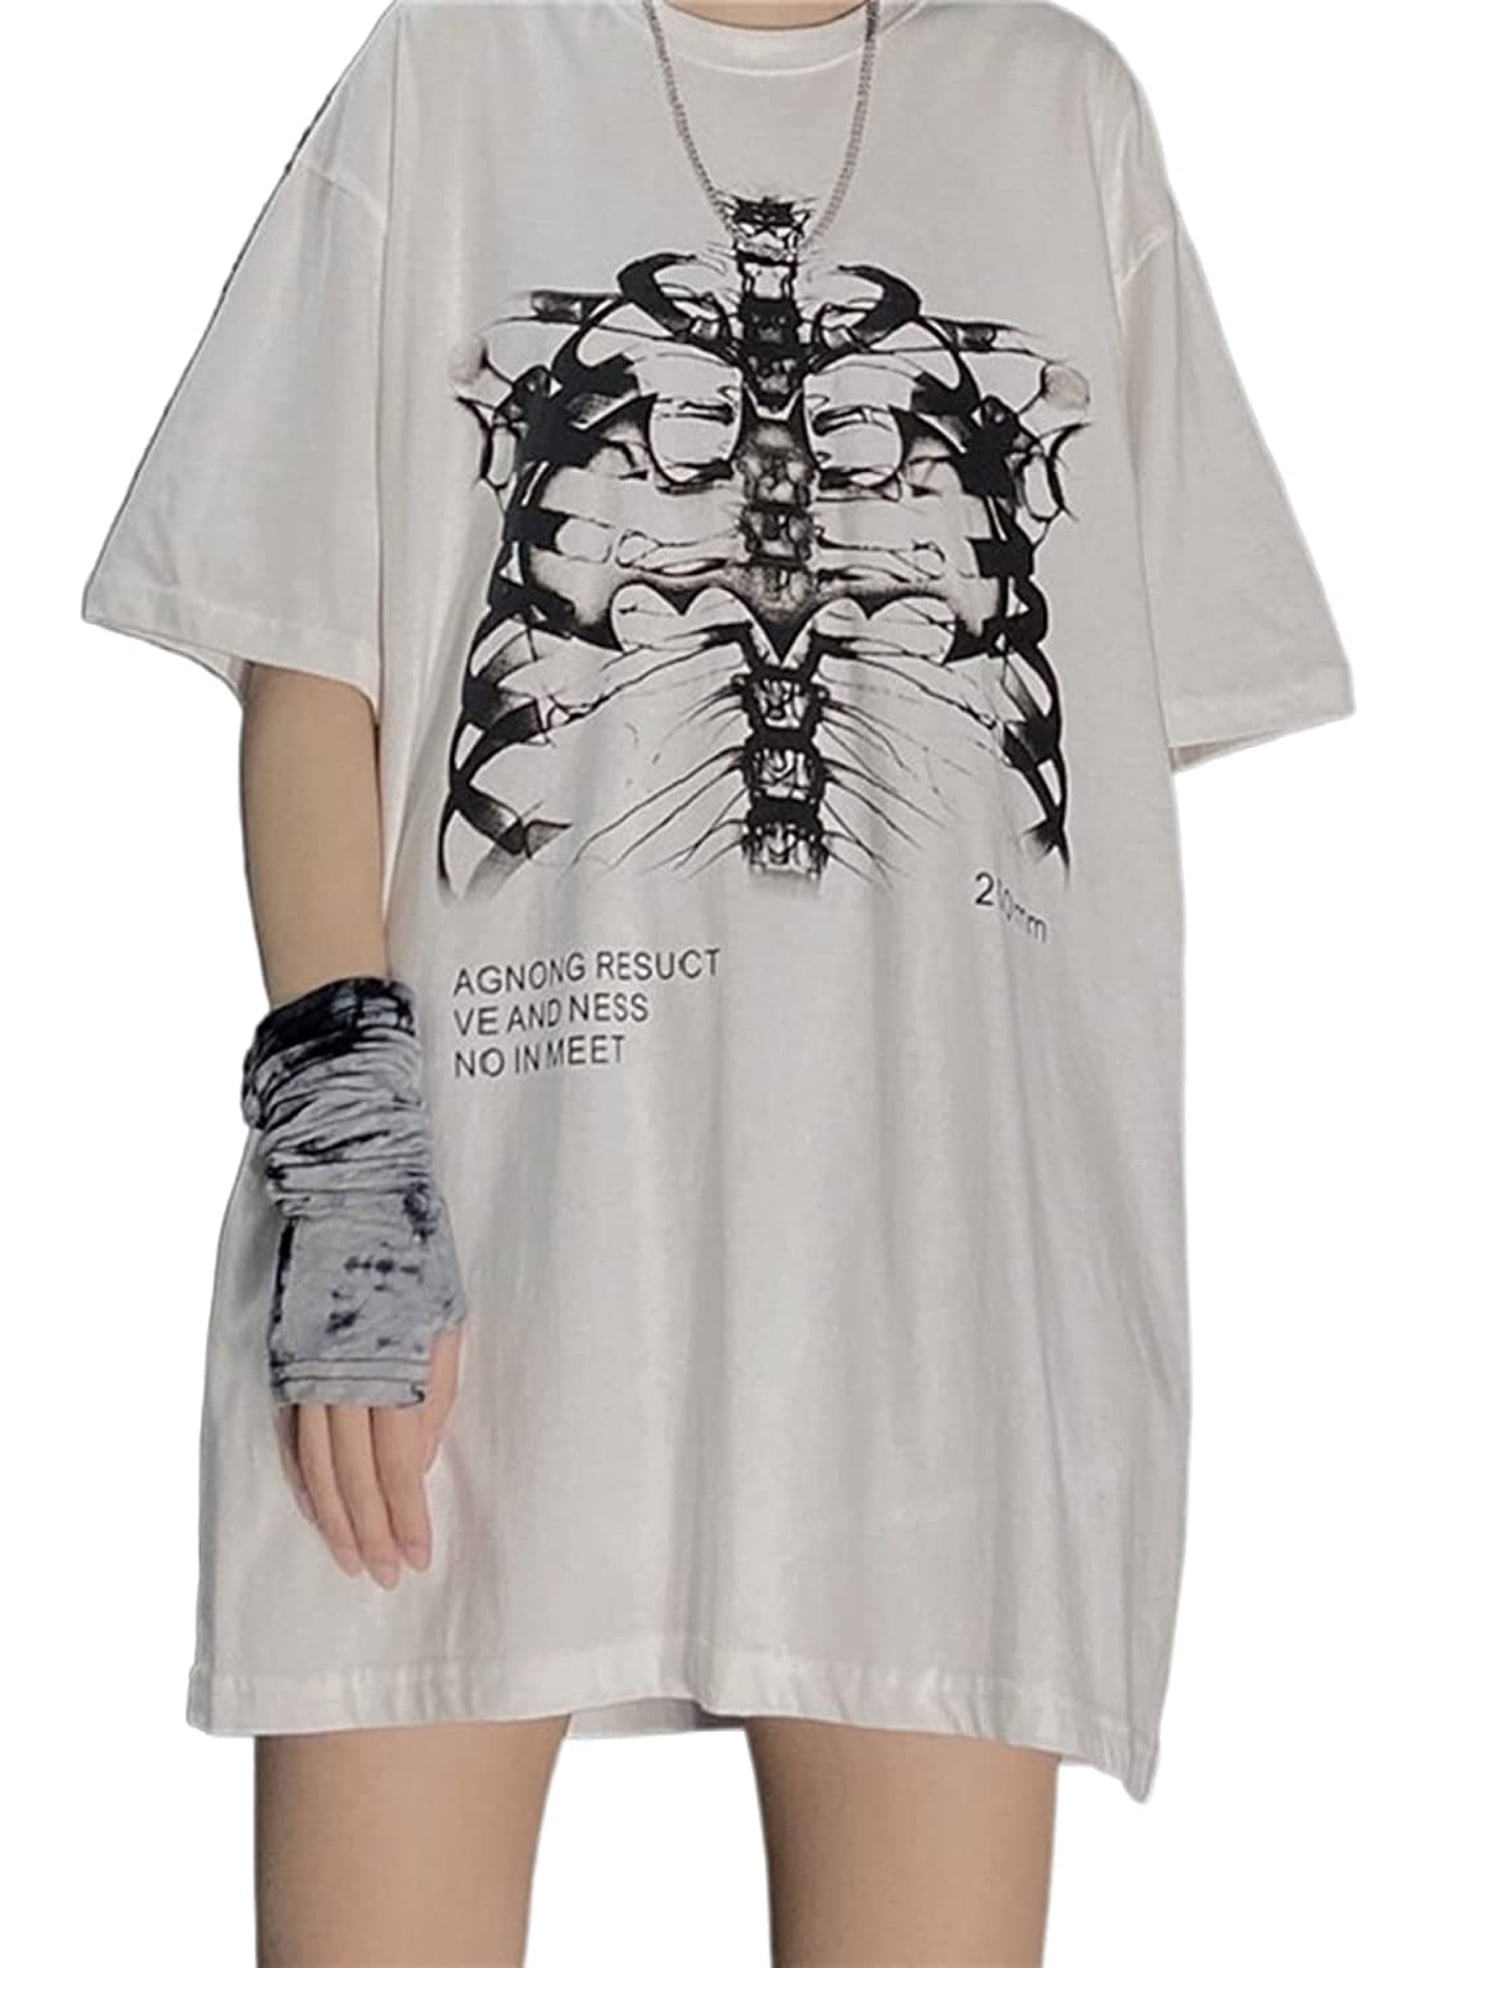 Eyicmarn Vintage Bone Printed T-Shirt Oversize Short Sleeve Tops 